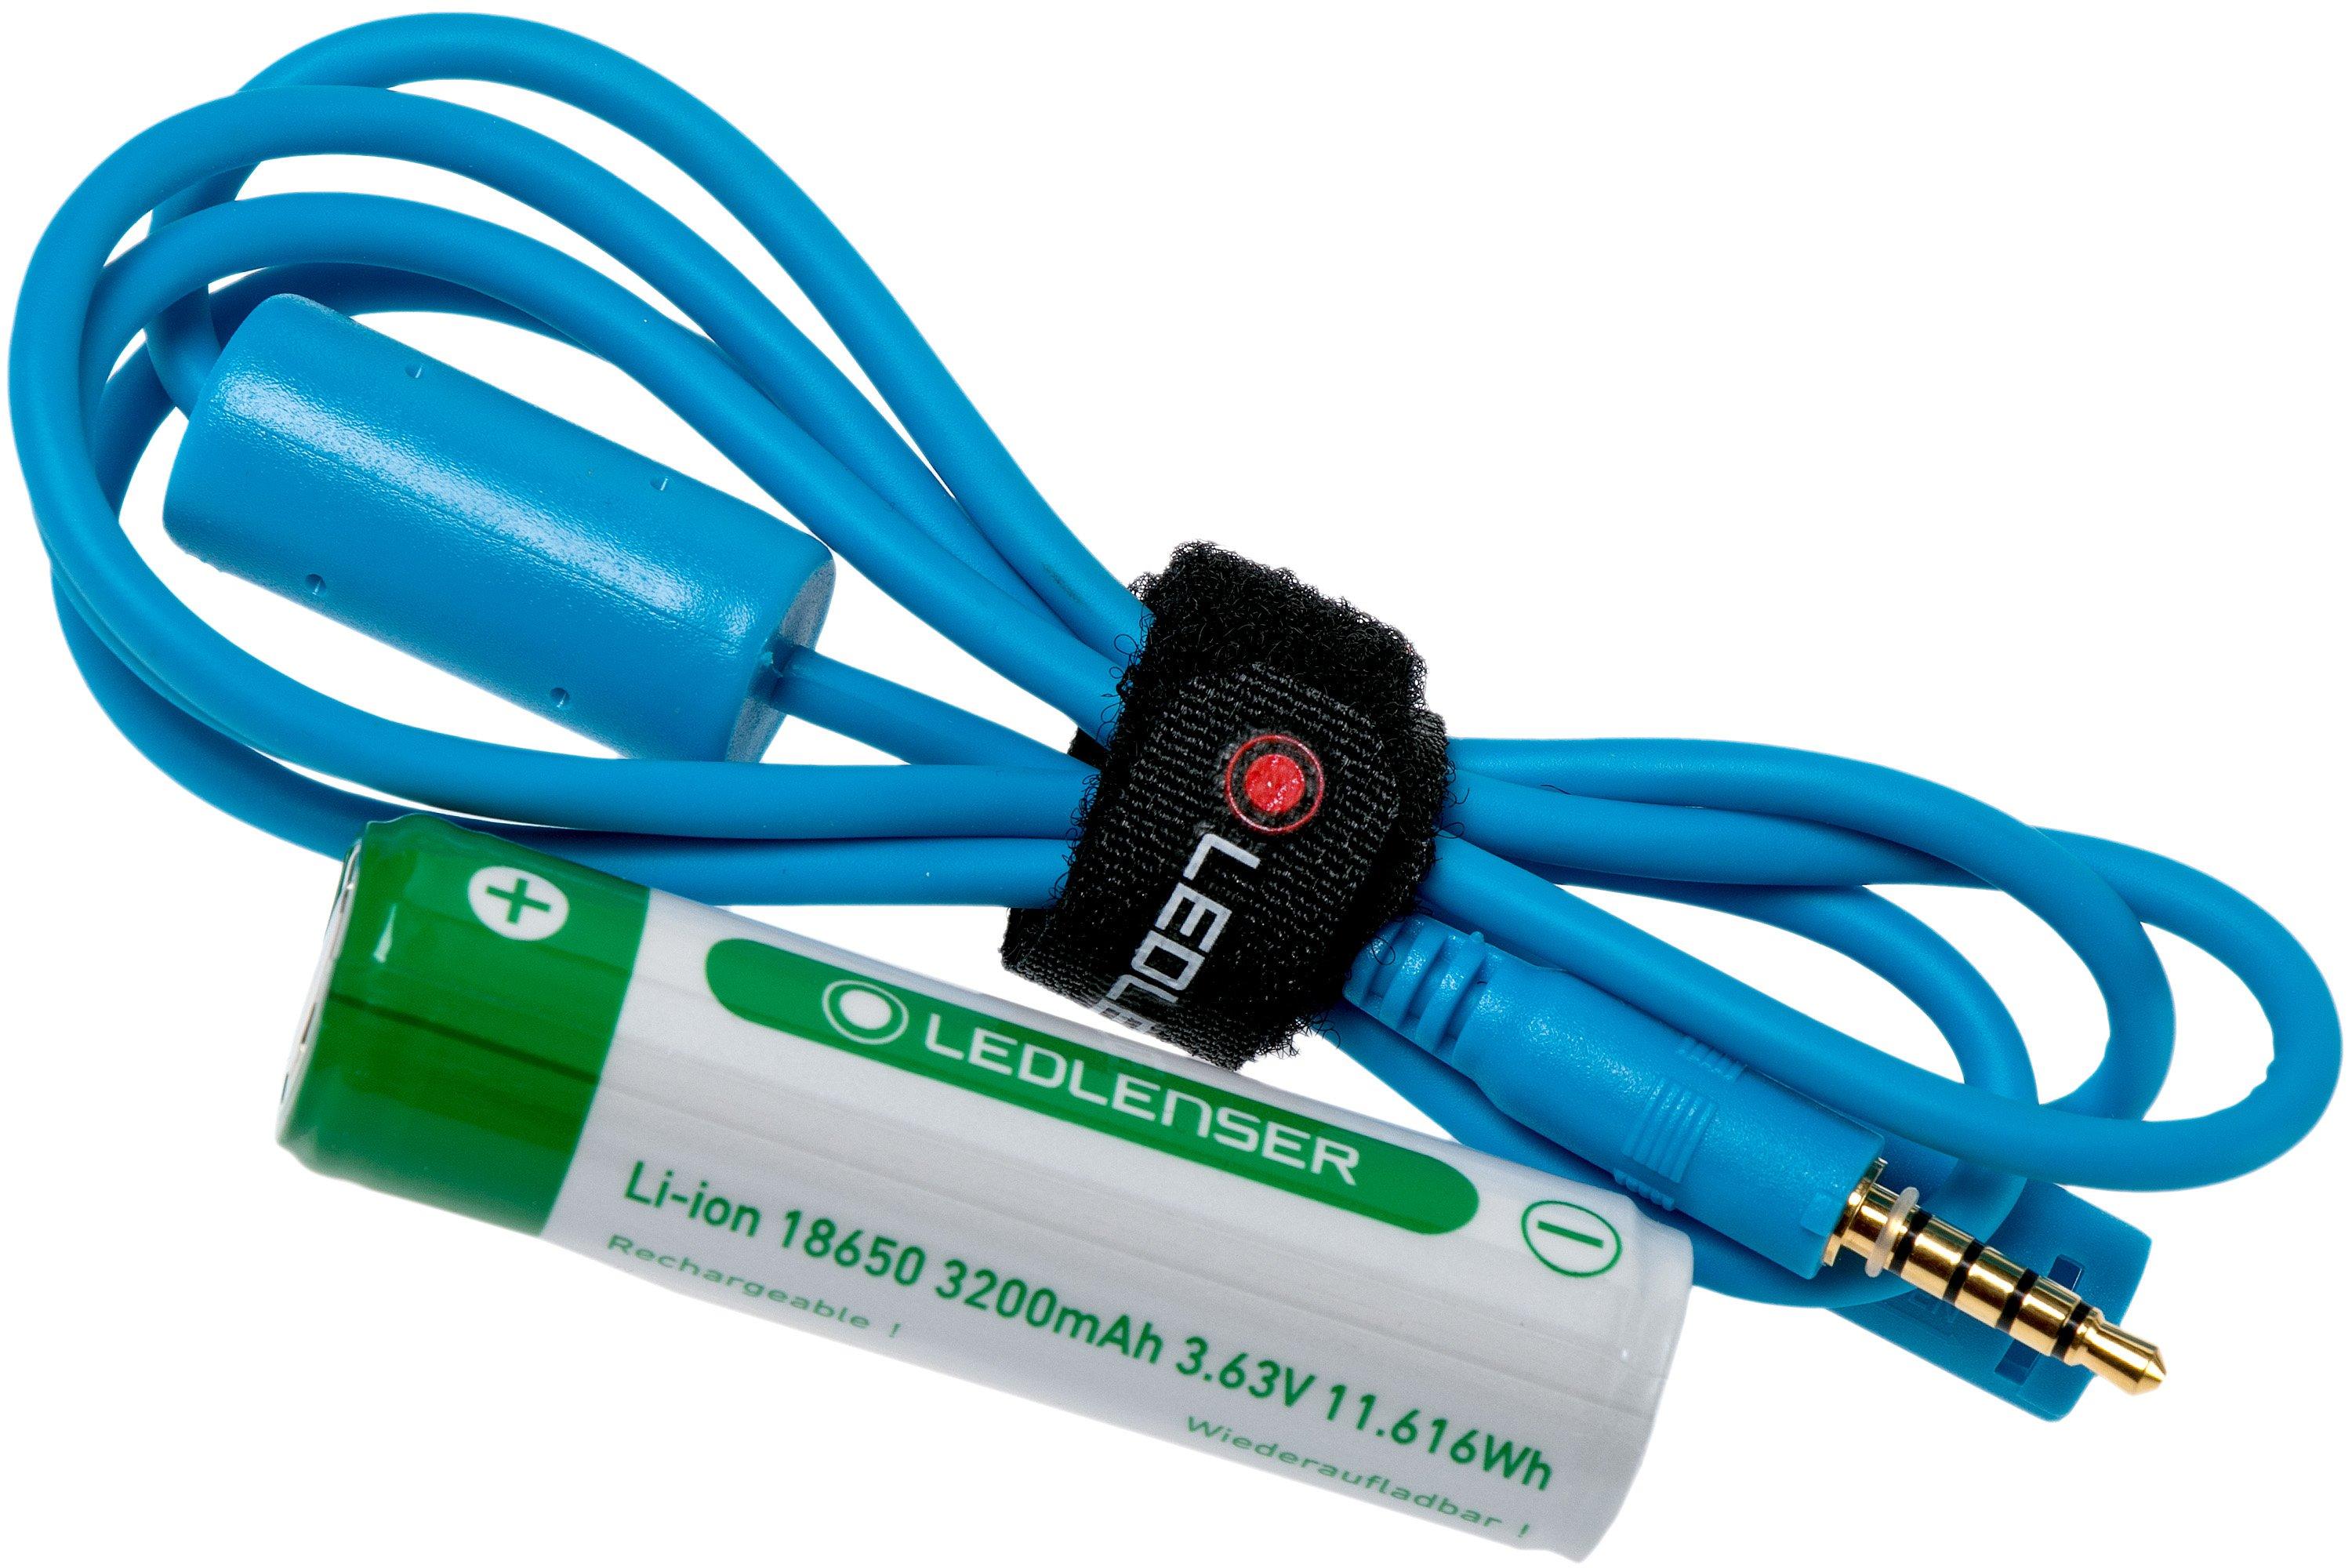 ▷ Frontal led lenser neo9r 1200lm azul por SOLO 109,00 €